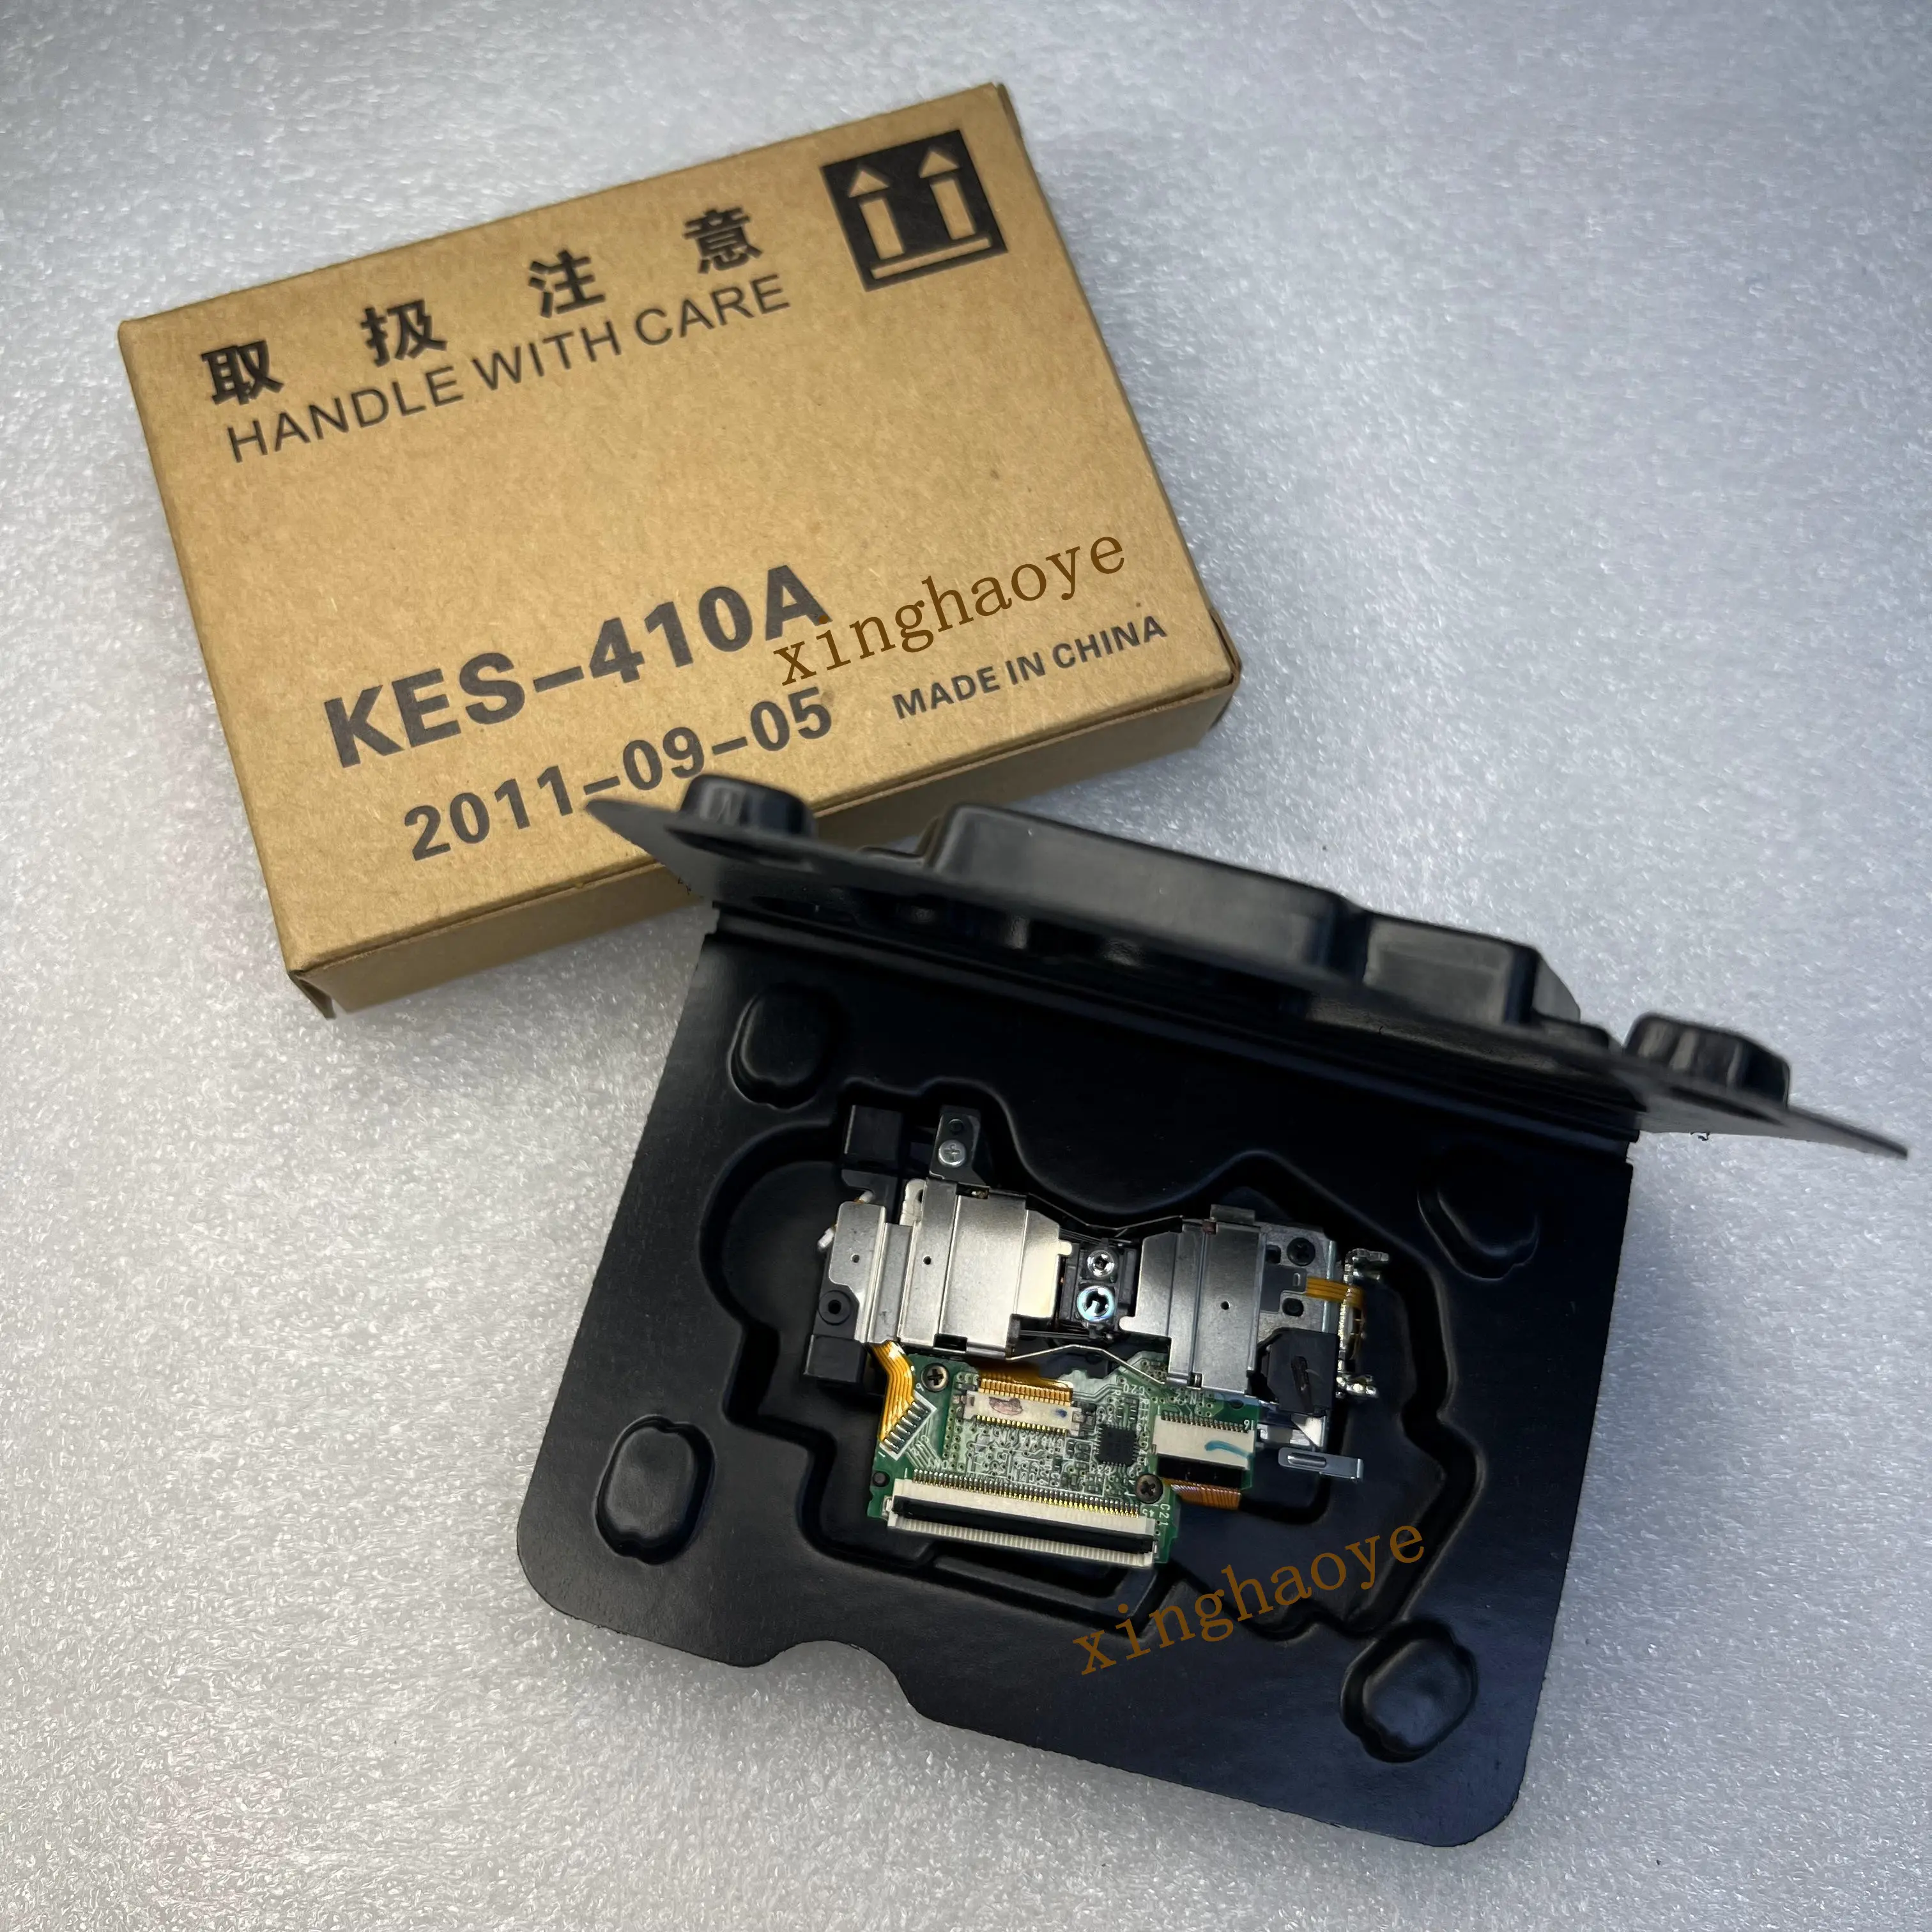 Orijinal kalite KES-410A KES410 lazer Lens PS3 Playstation 3 konsolu onarım bölümü için